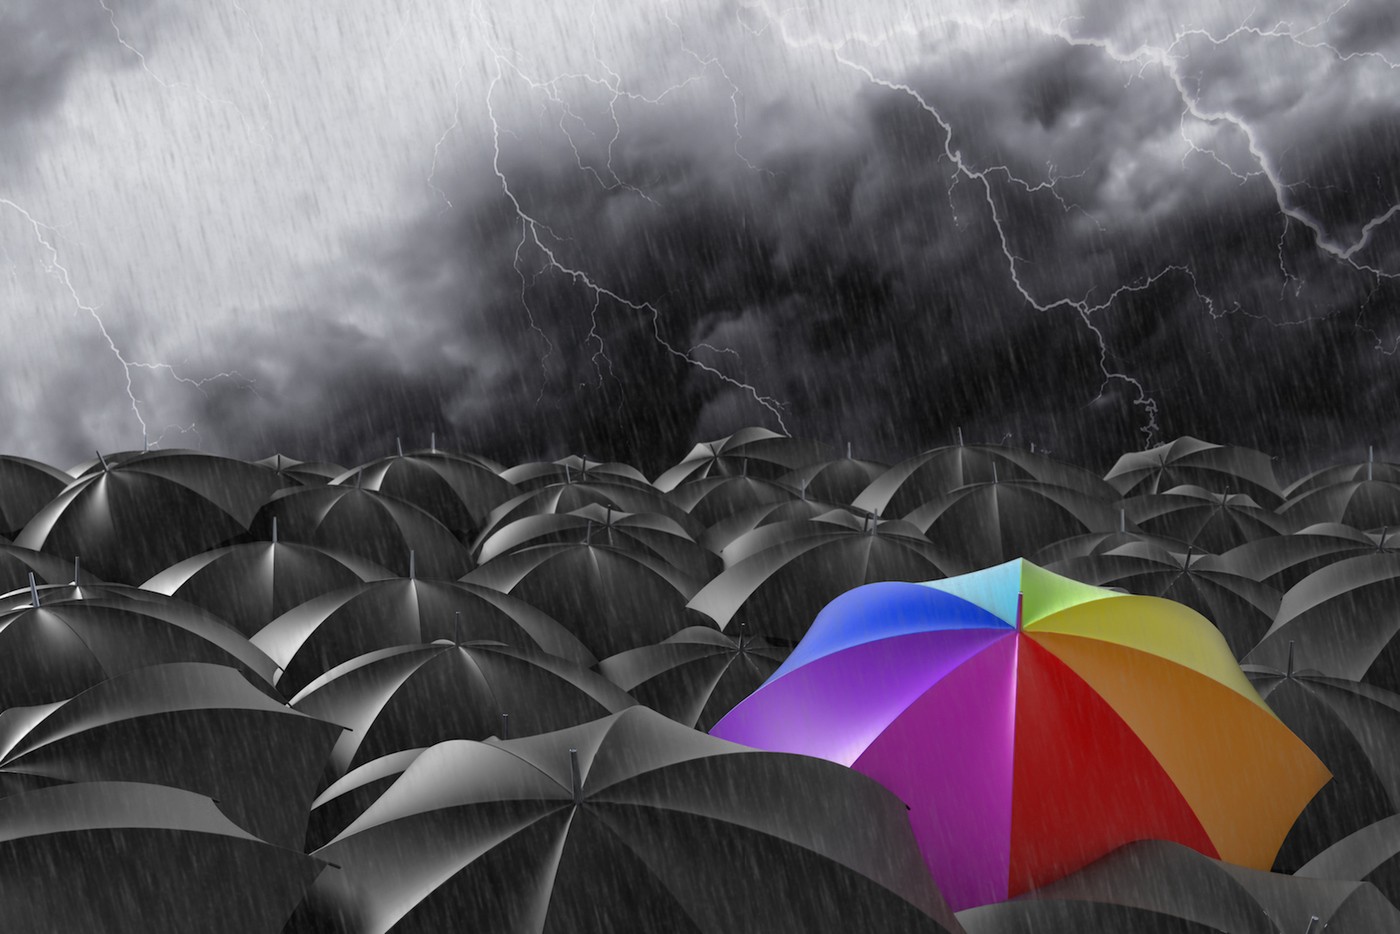 rainbow umbrella surrounded by black umbrellos